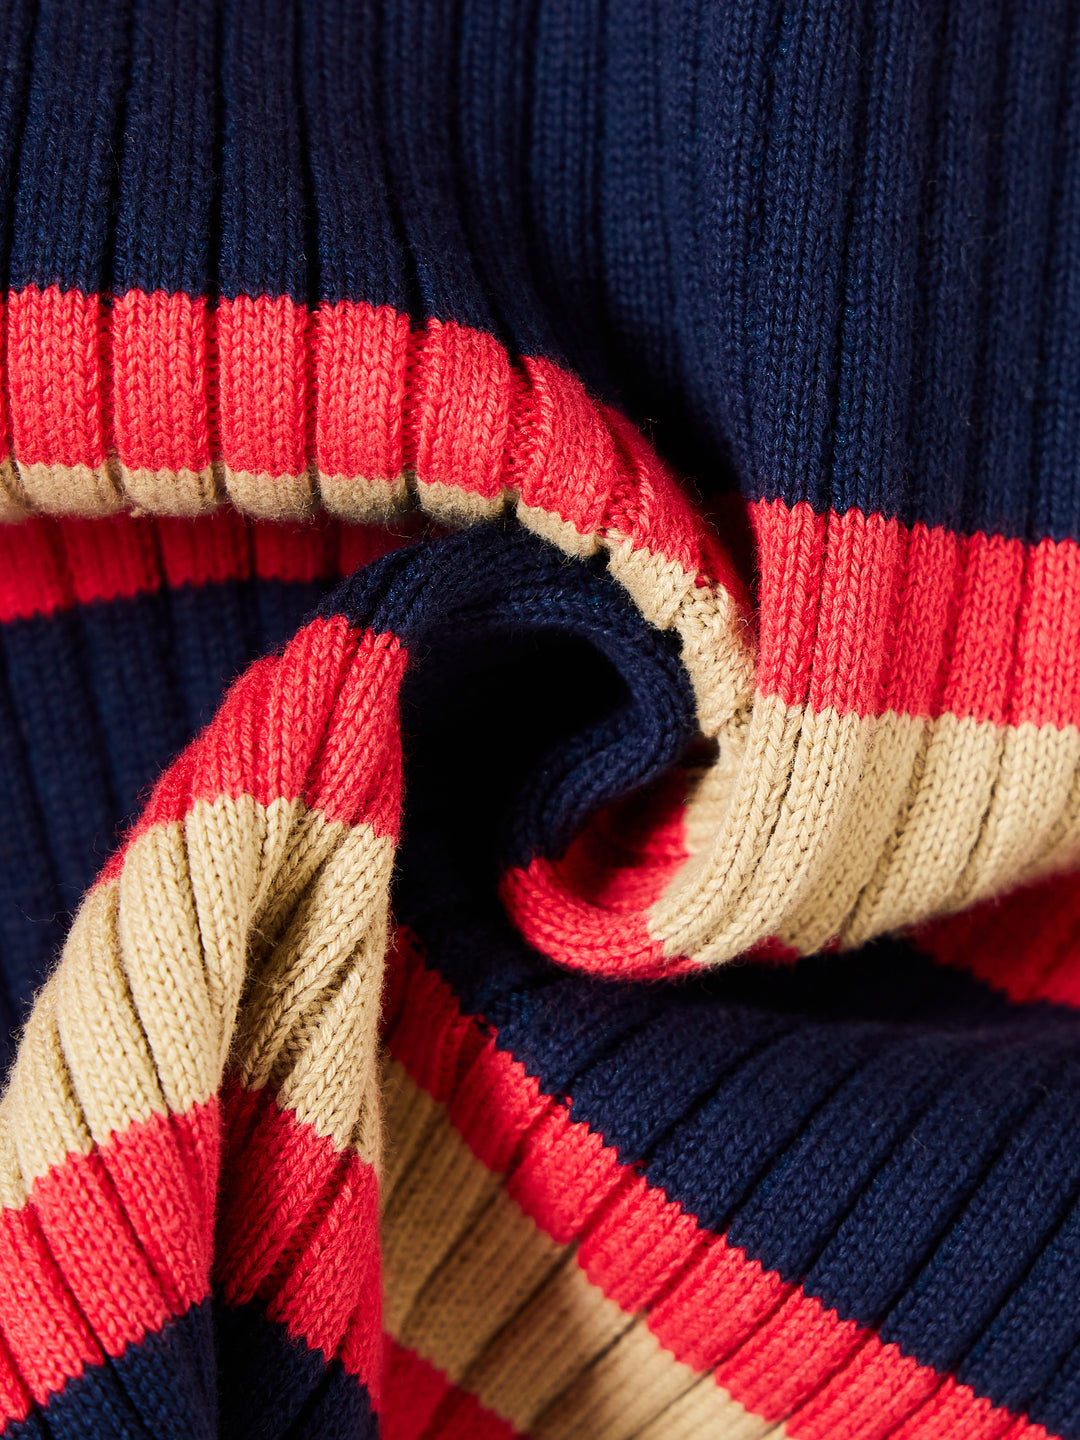 Colored Stripes Turtleneck Sweater - Denim